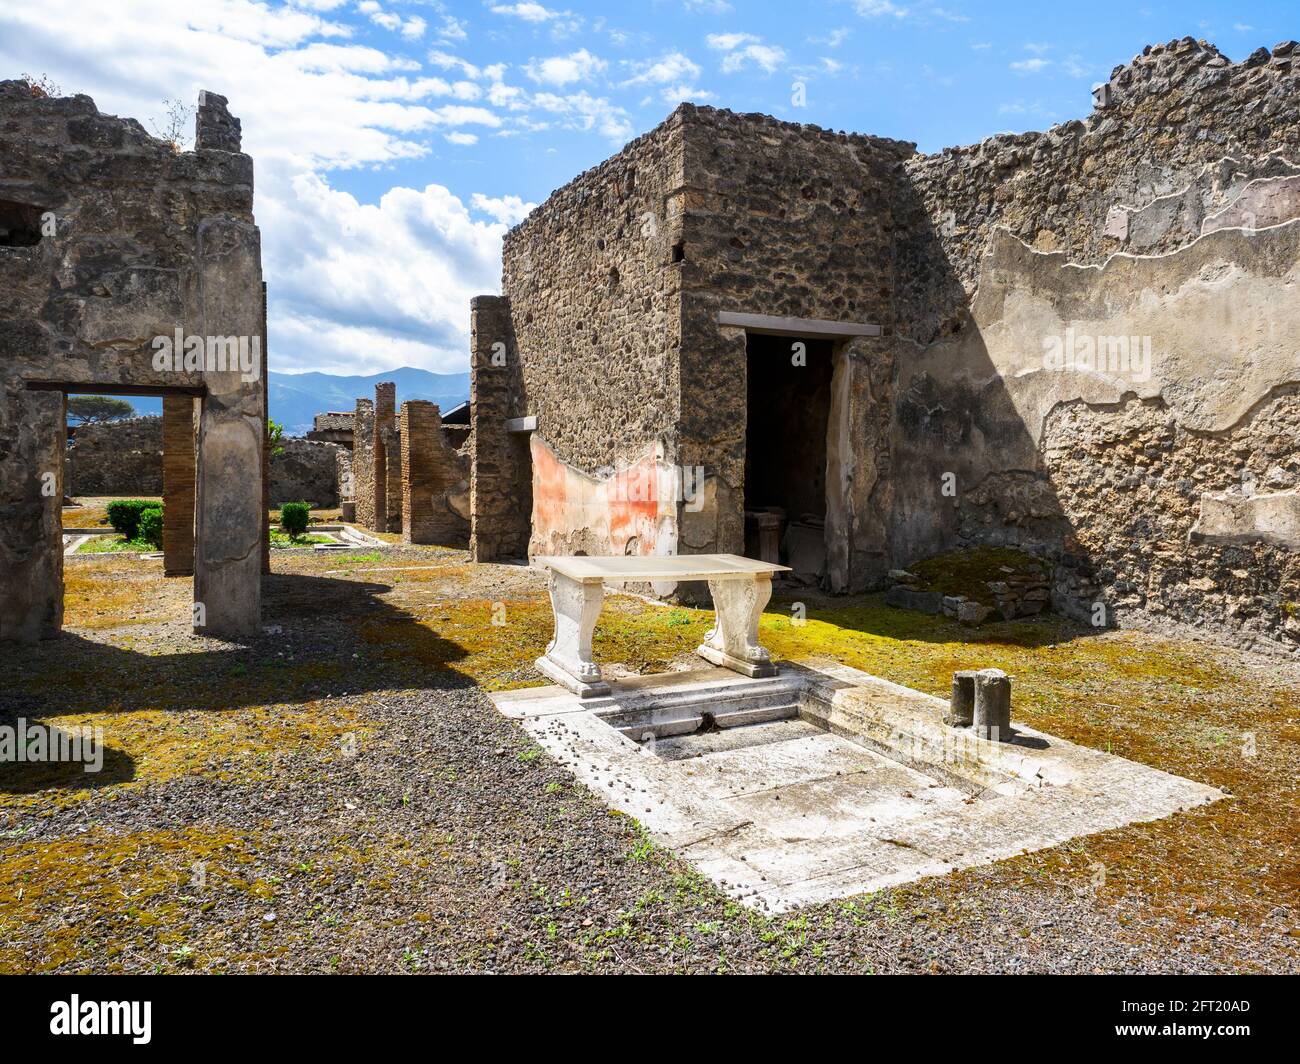 Thermopolium and house of Vetutius Placidus (Casa e Thermopolium di Vetutius Placidus) - Pompeii archaeological site, Italy Stock Photo